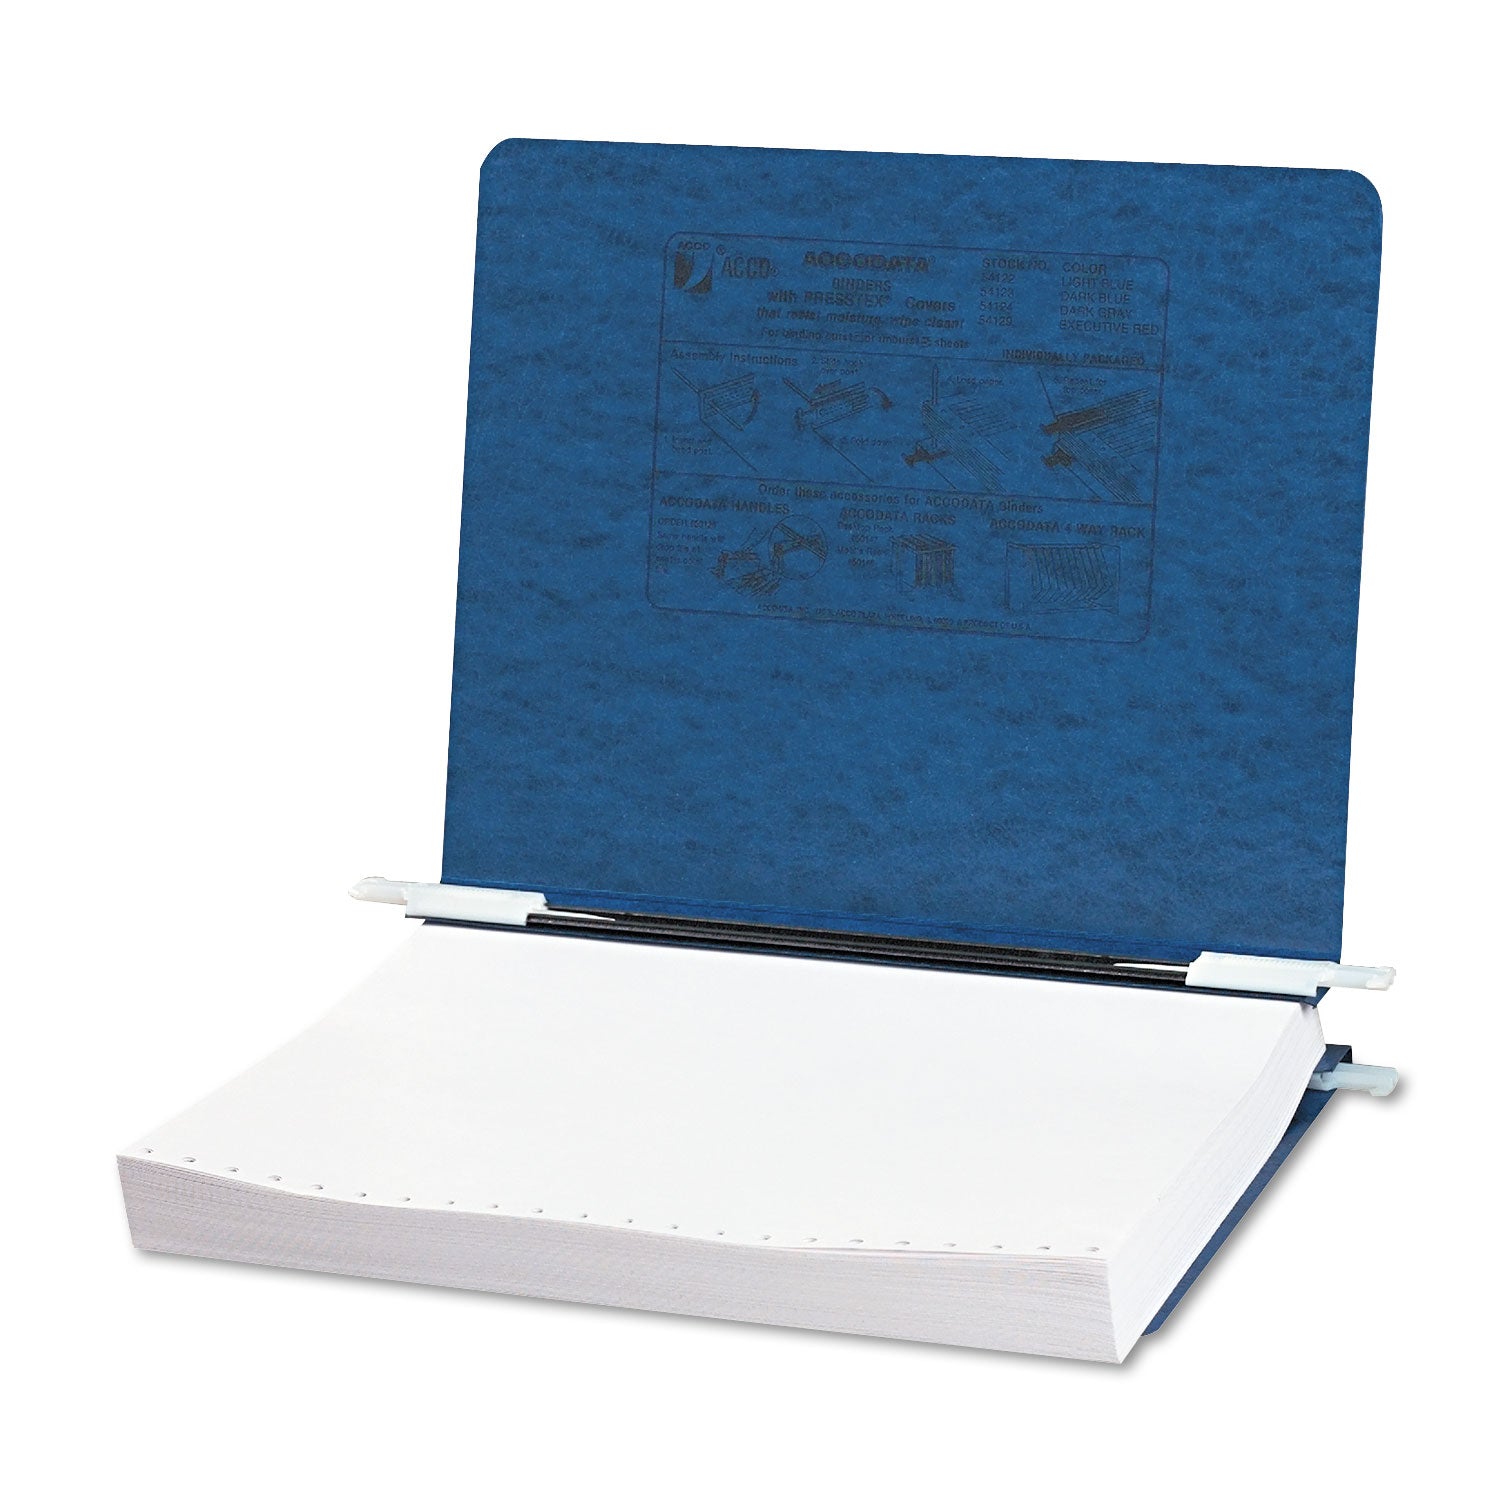 PRESSTEX Covers with Storage Hooks, 2 Posts, 6" Capacity, 11 x 8.5, Dark Blue - 